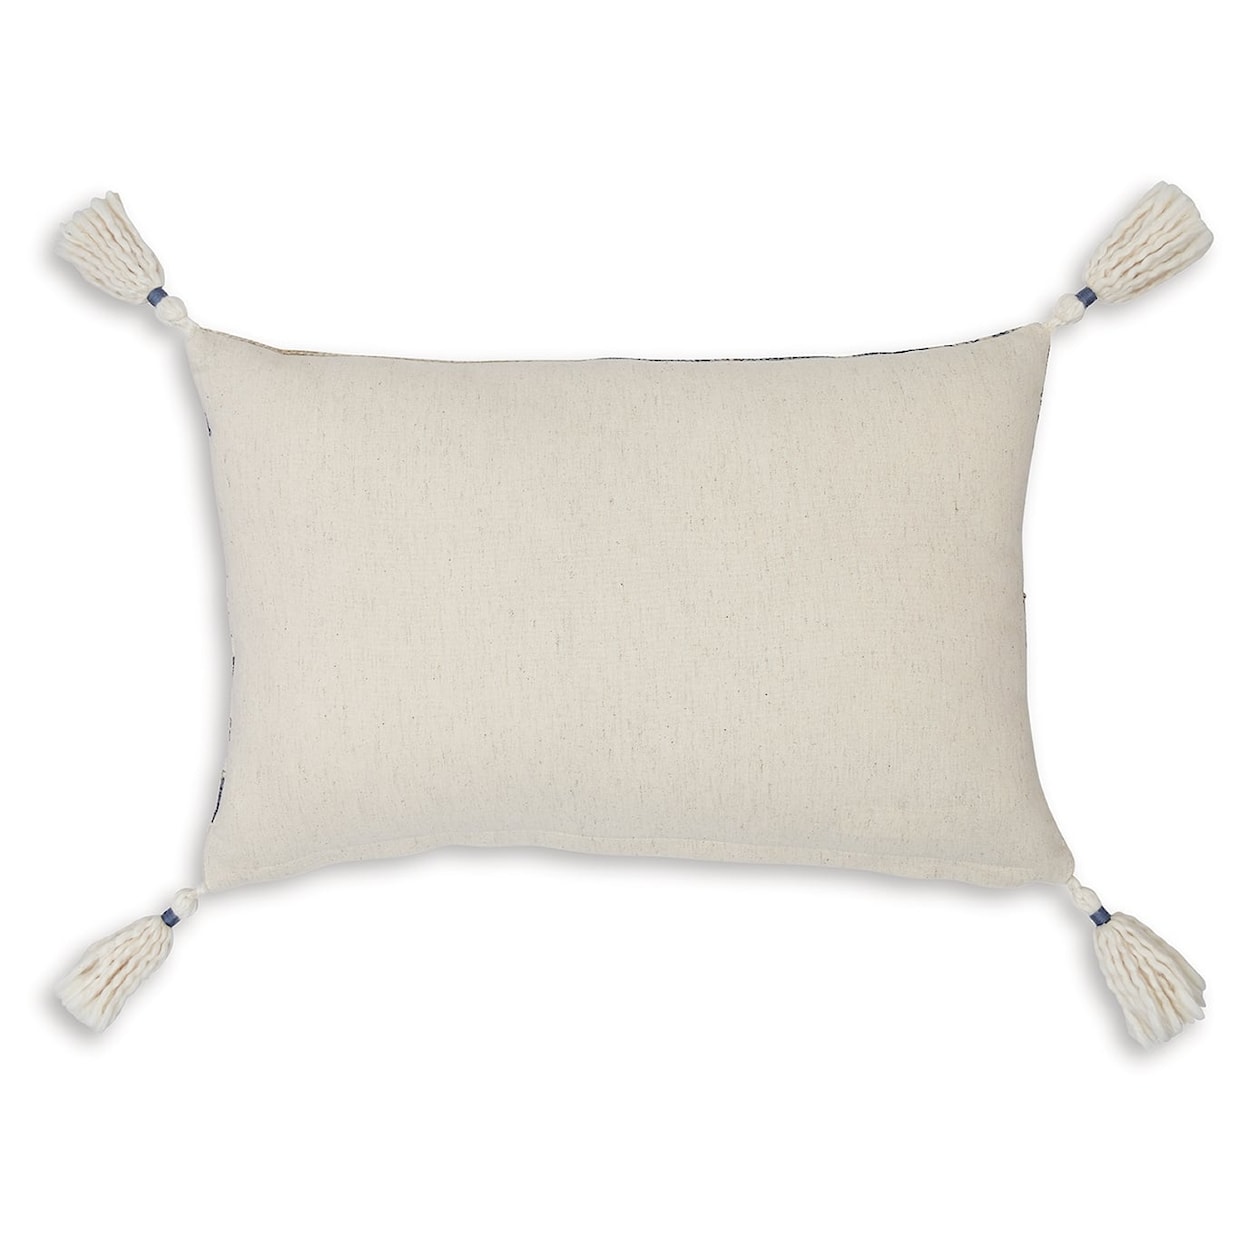 Ashley Furniture Signature Design Winbury Pillow